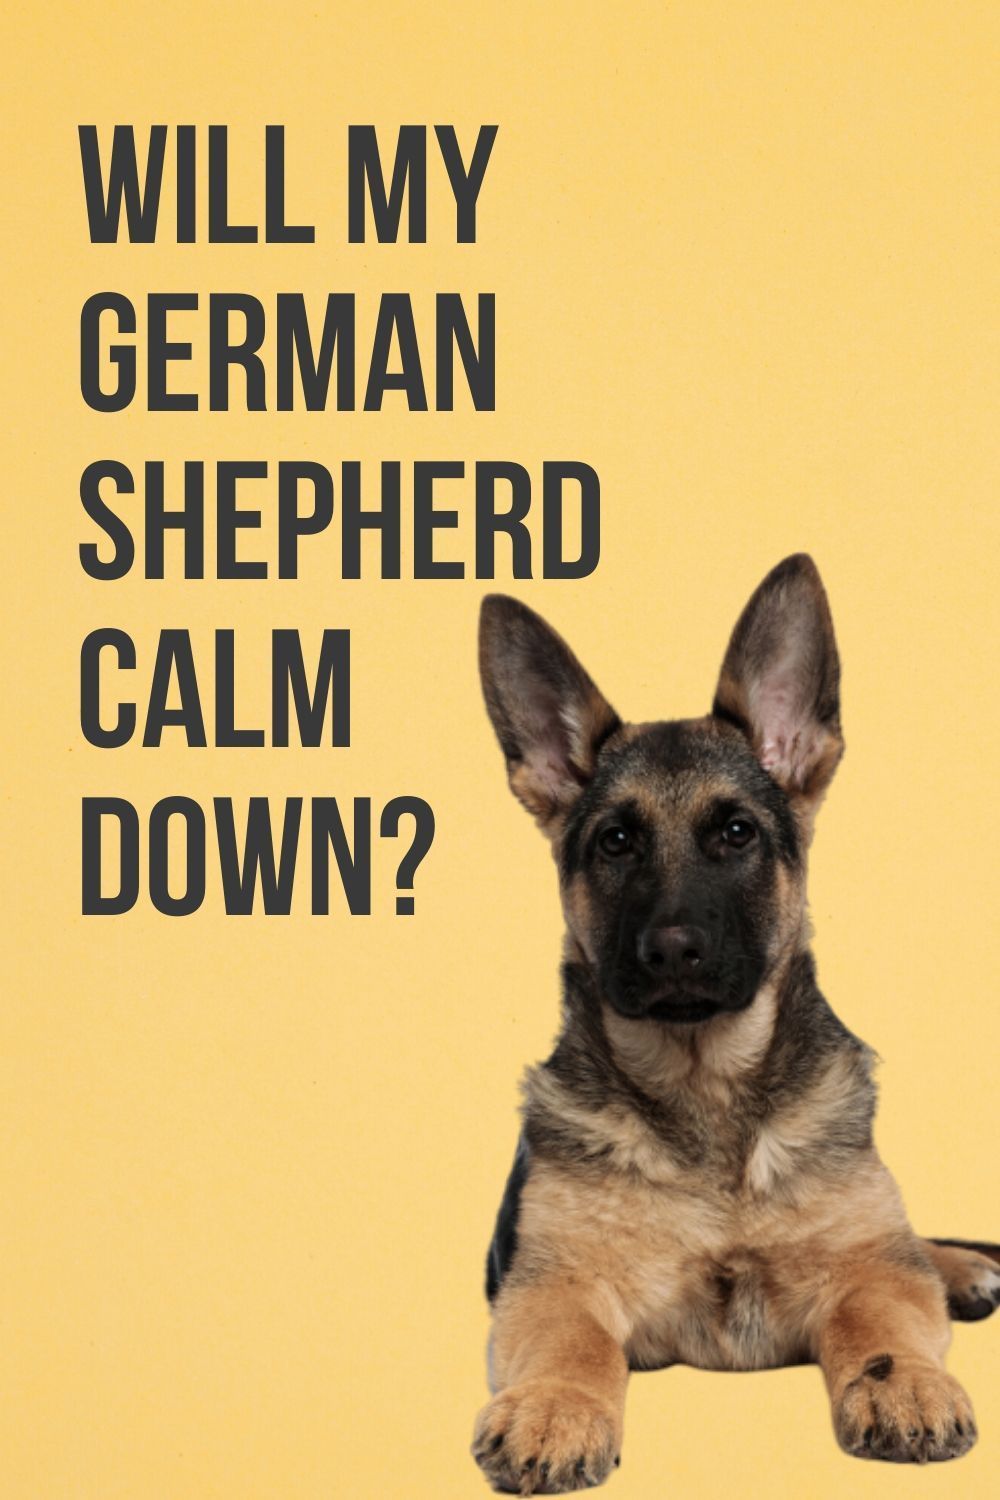 When German Shepherds Calm Down in 2020